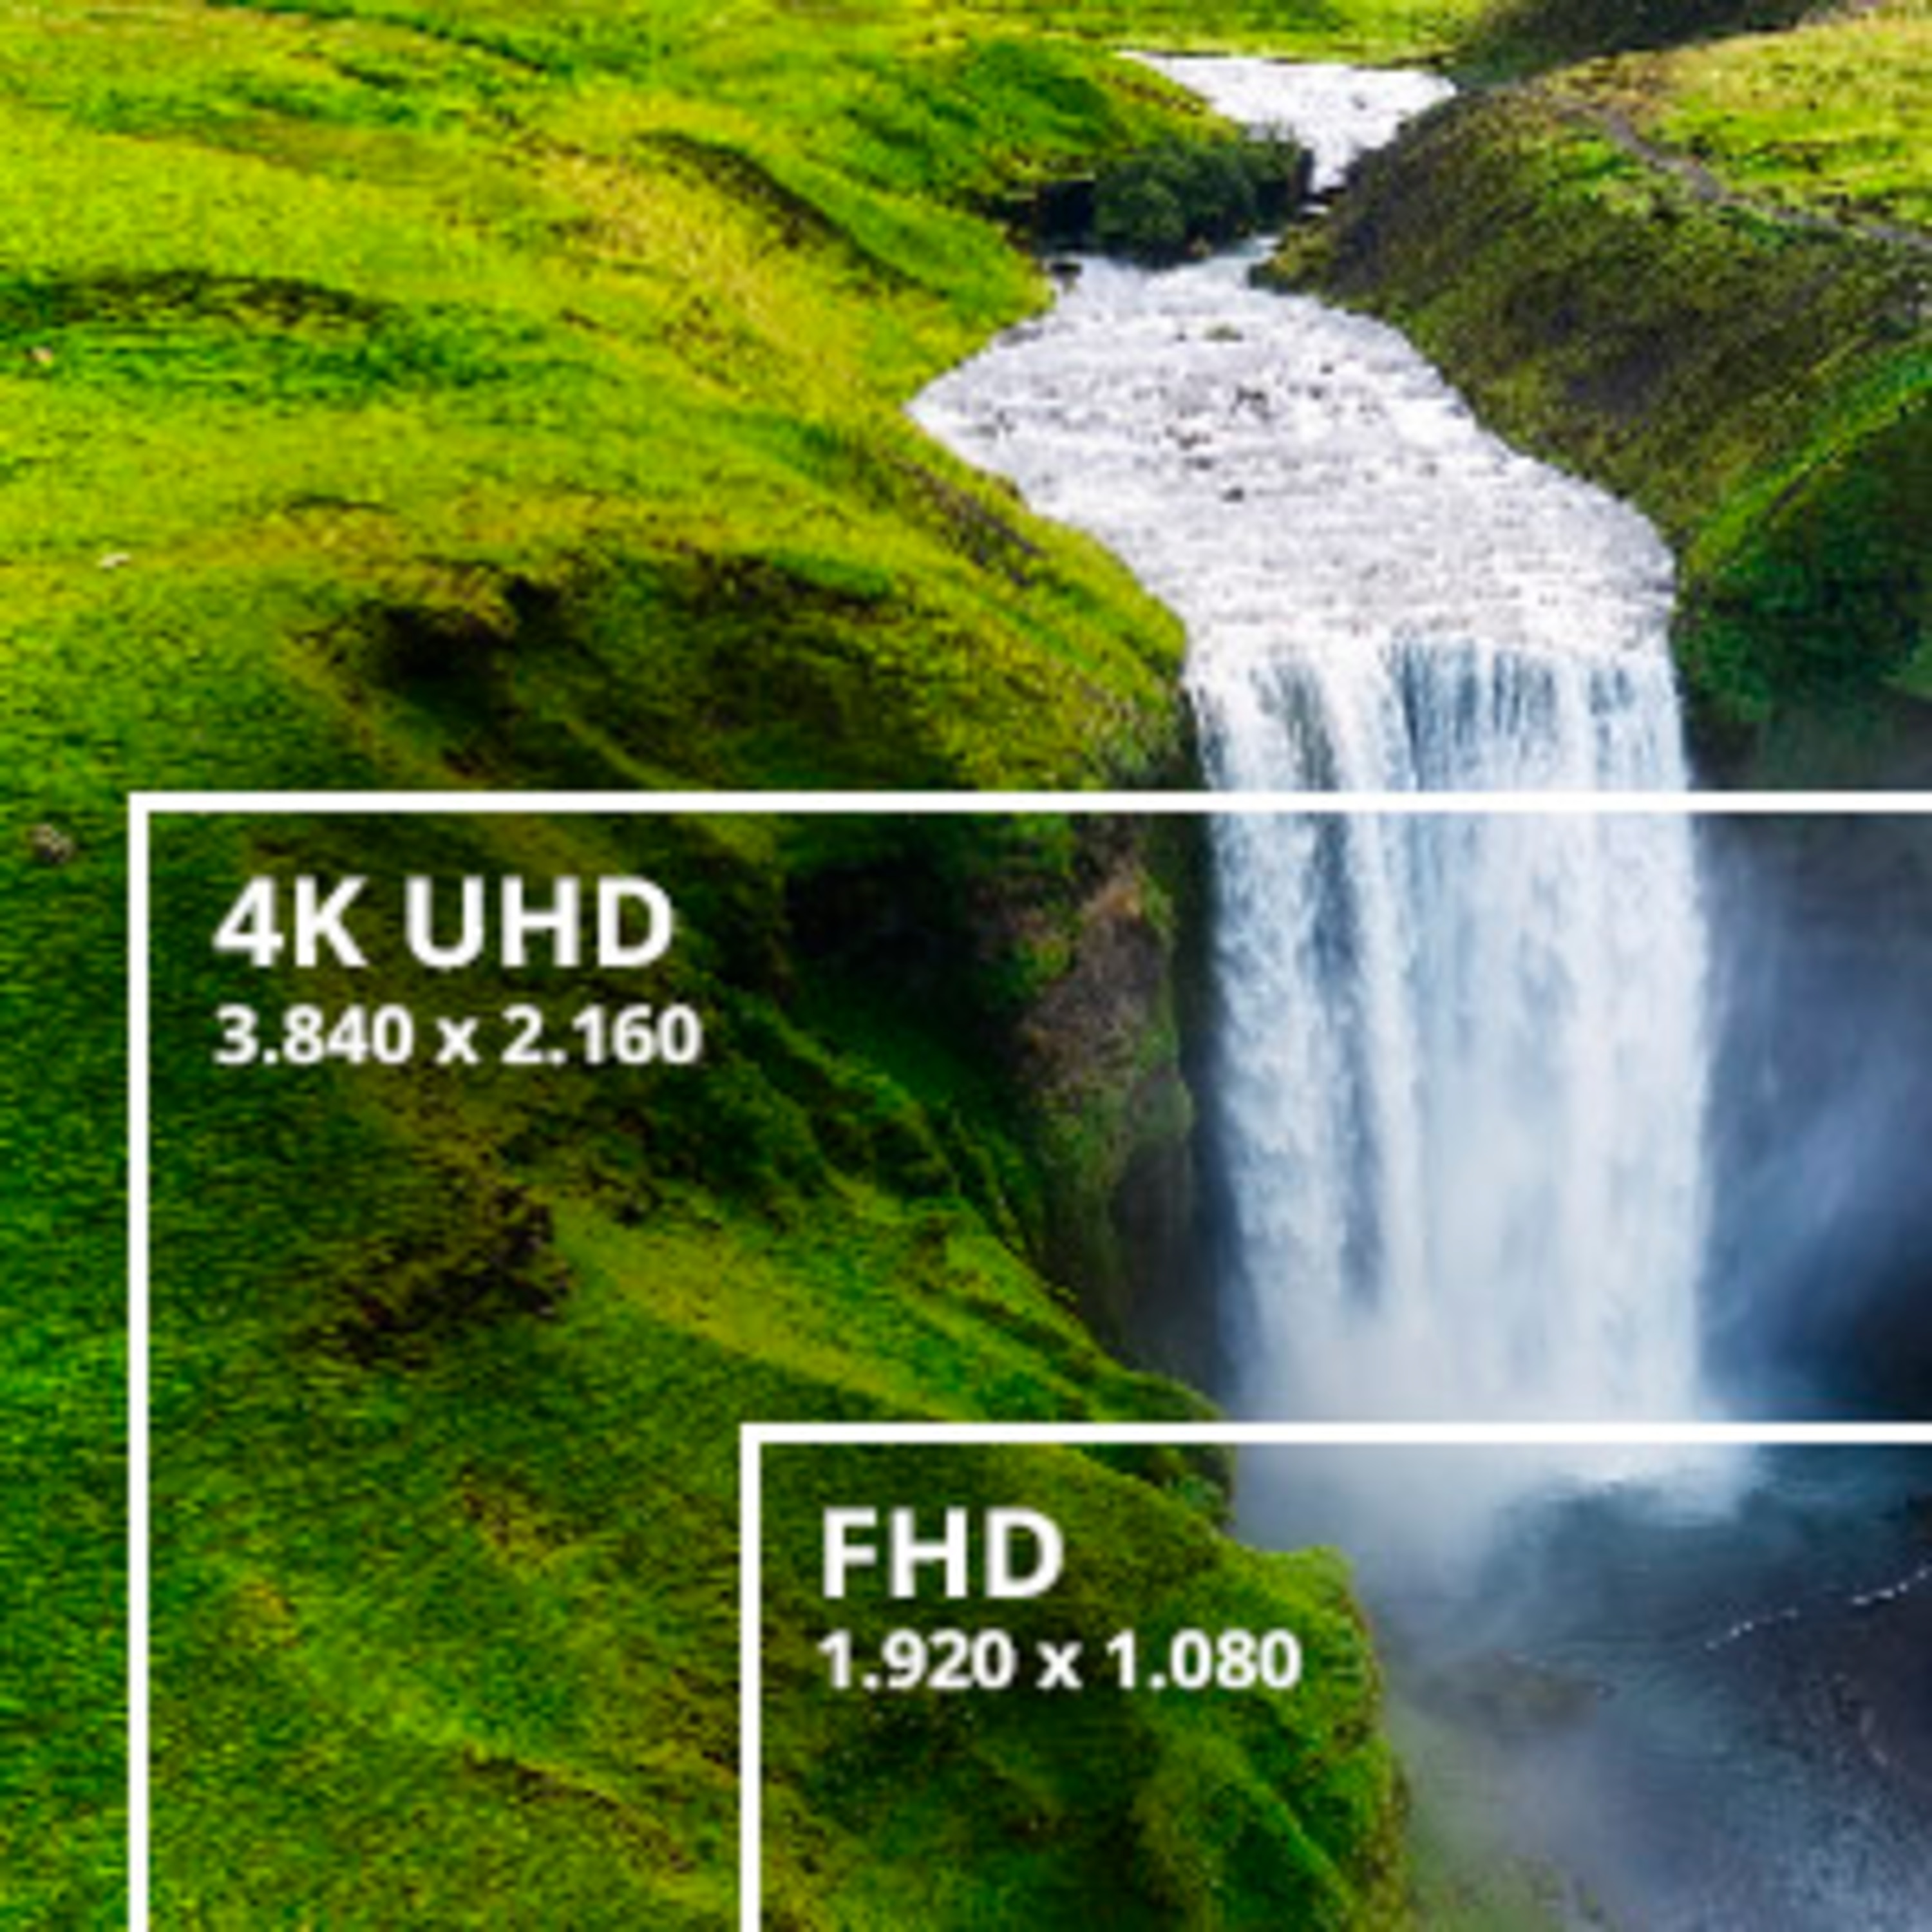 Ultra HD-Auflösung: viermal so scharf wie Full HD